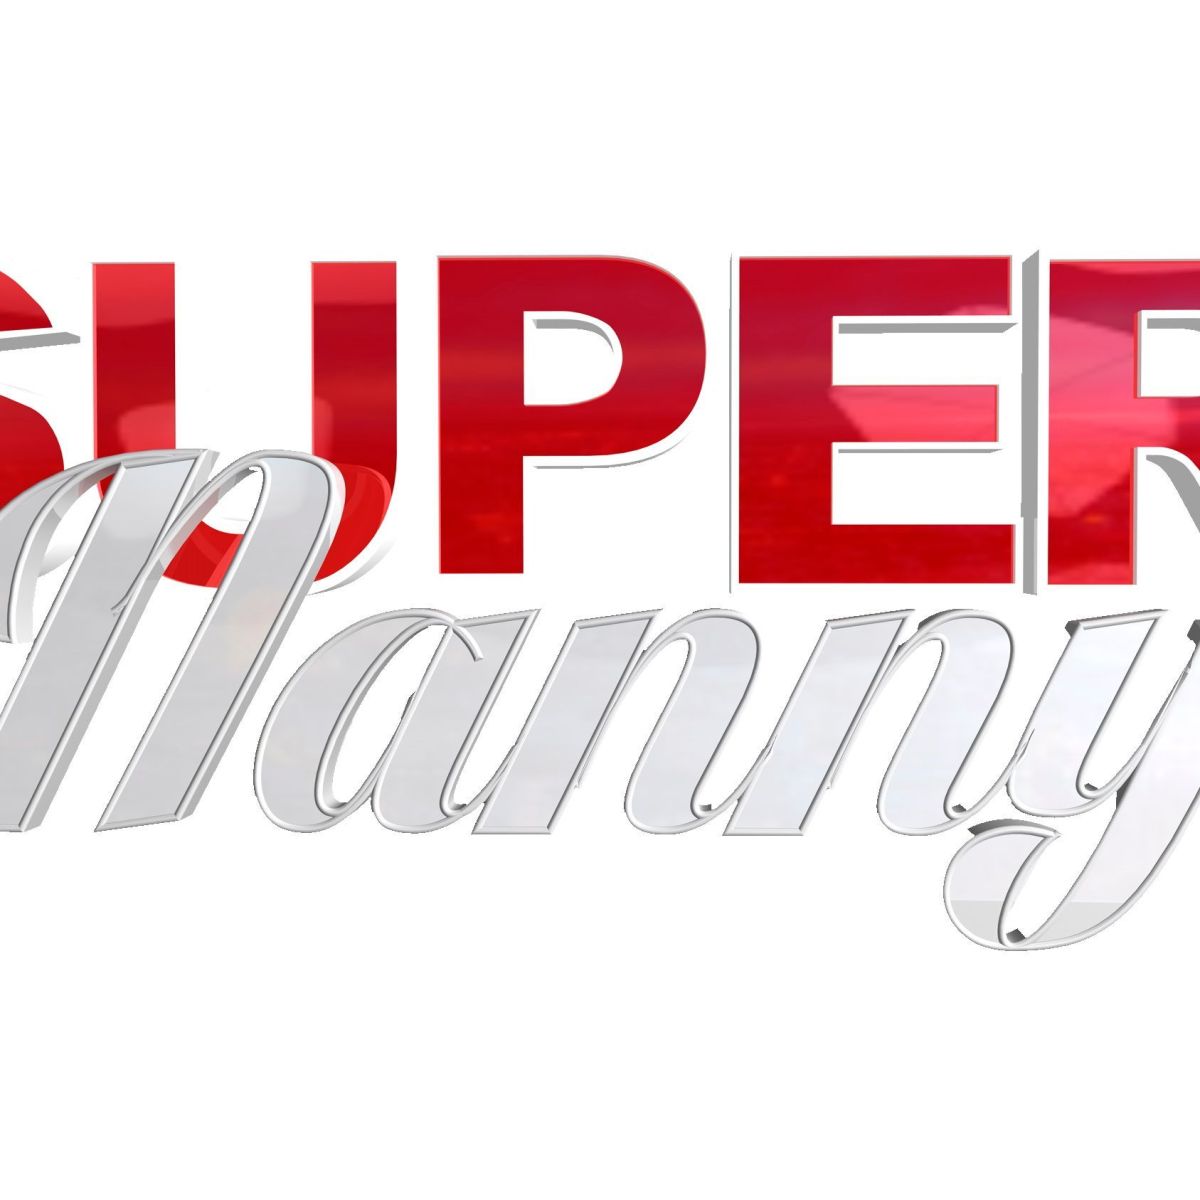 Comment participer à l’émission Super Nanny ?